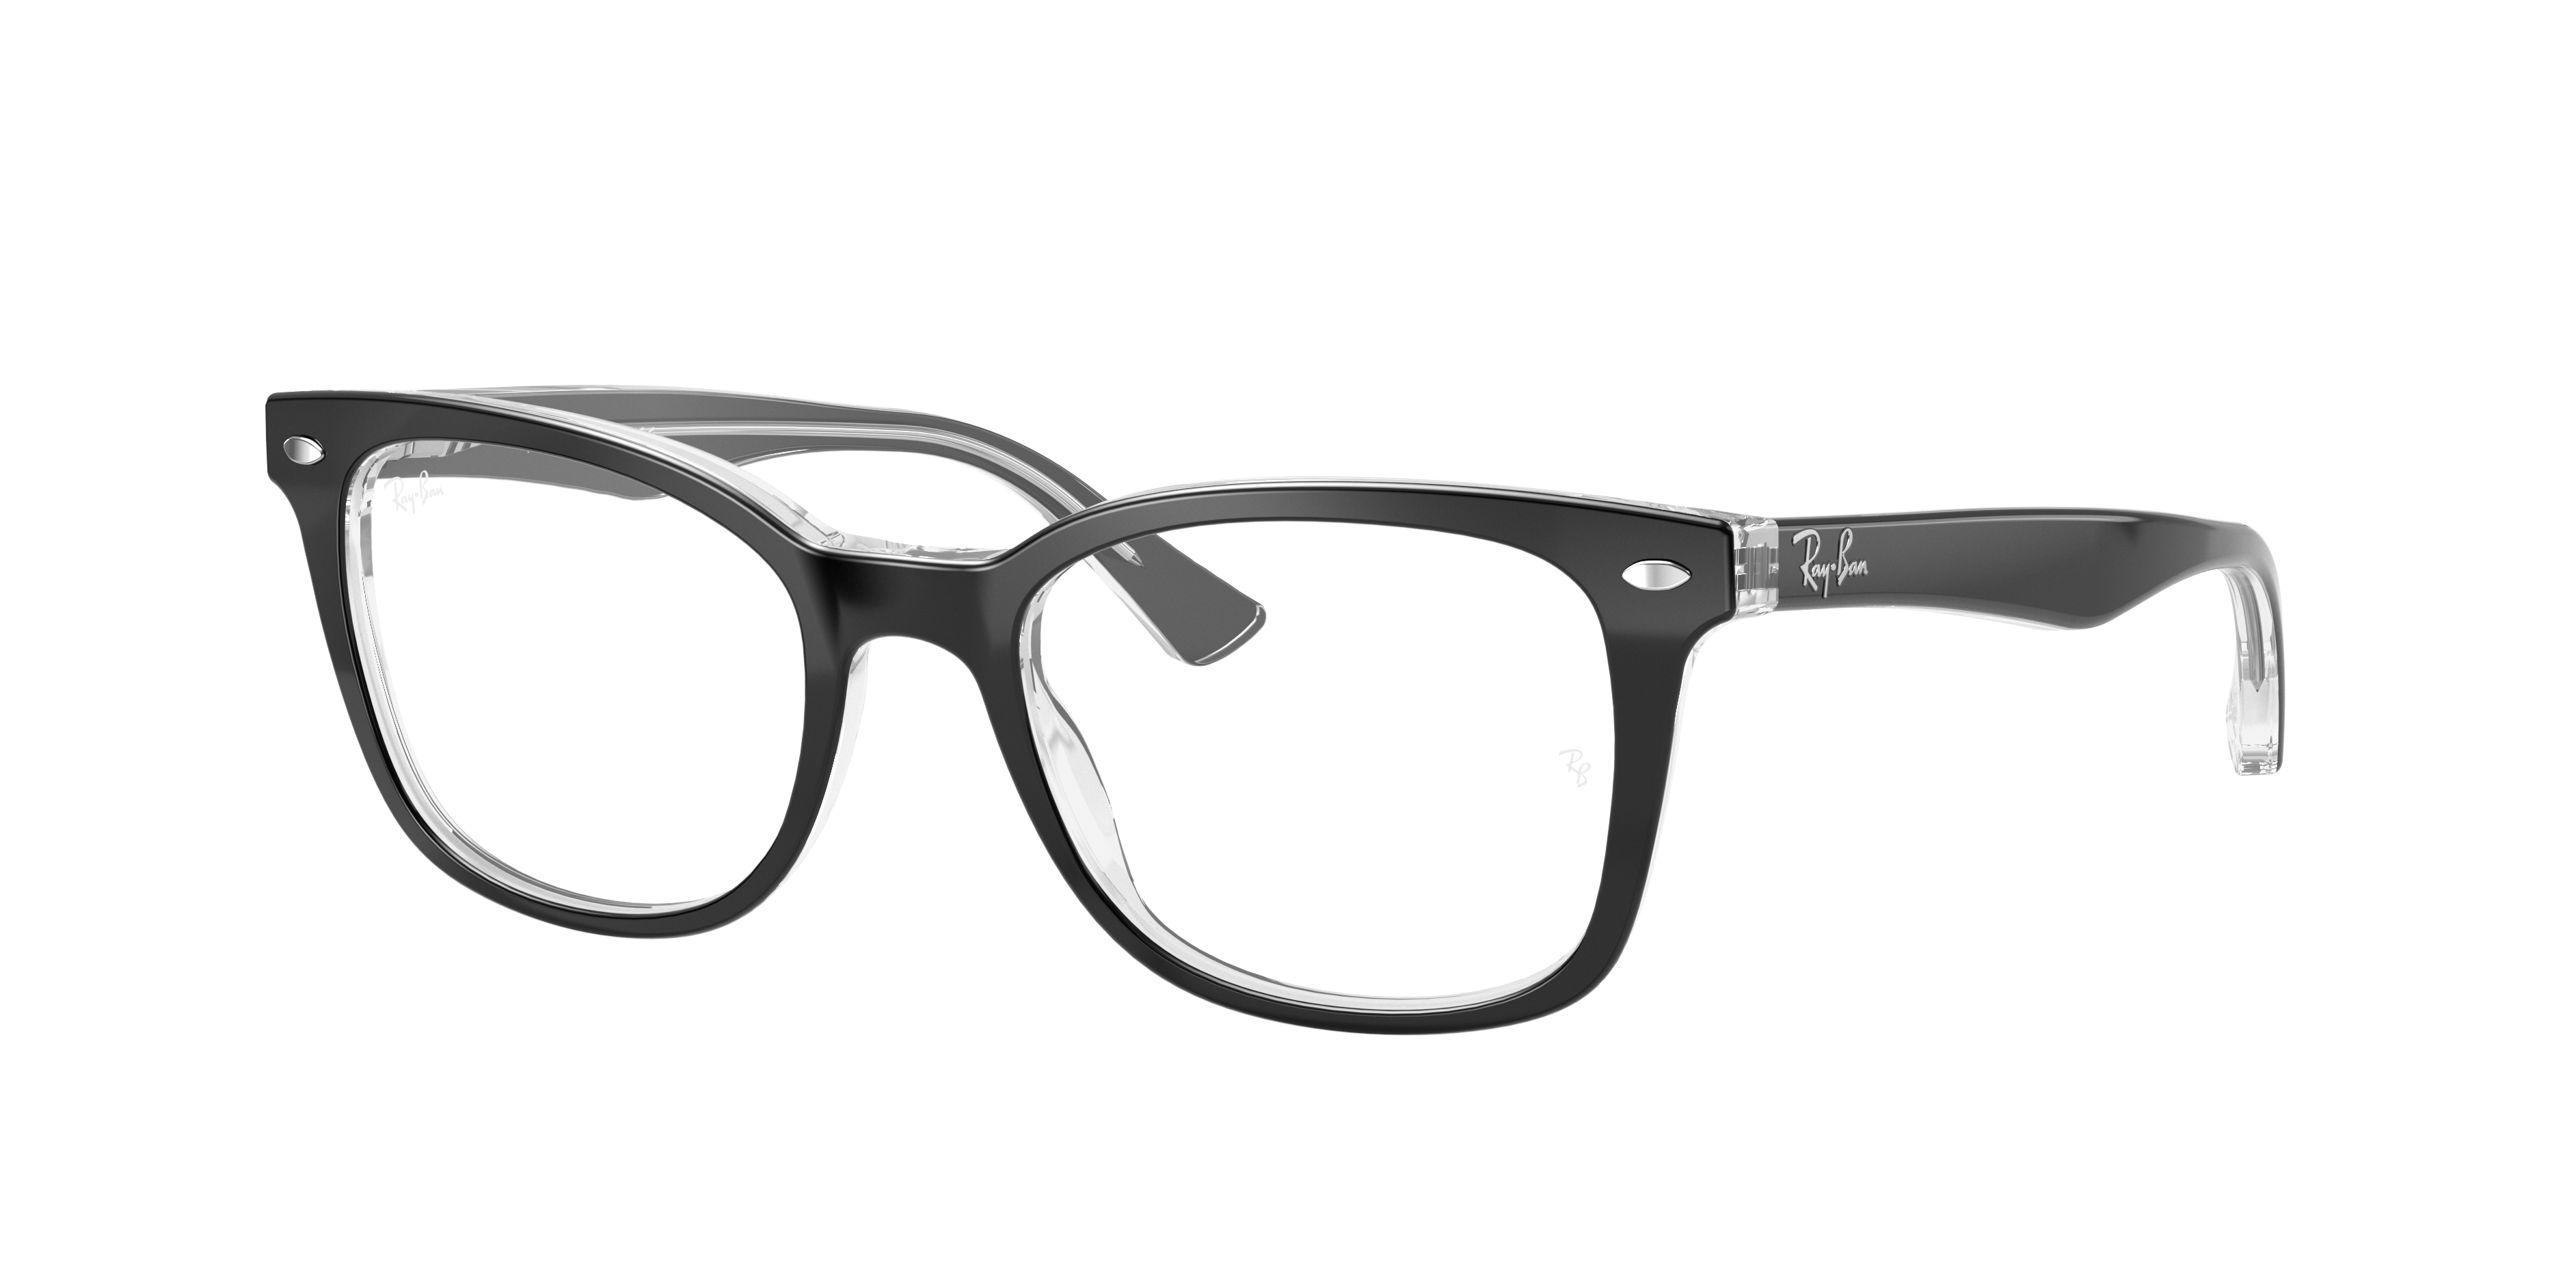 Plaats Knorrig Bruidegom Rb5285 Optics Eyeglasses with Black On Transparent Frame | Ray-Ban®